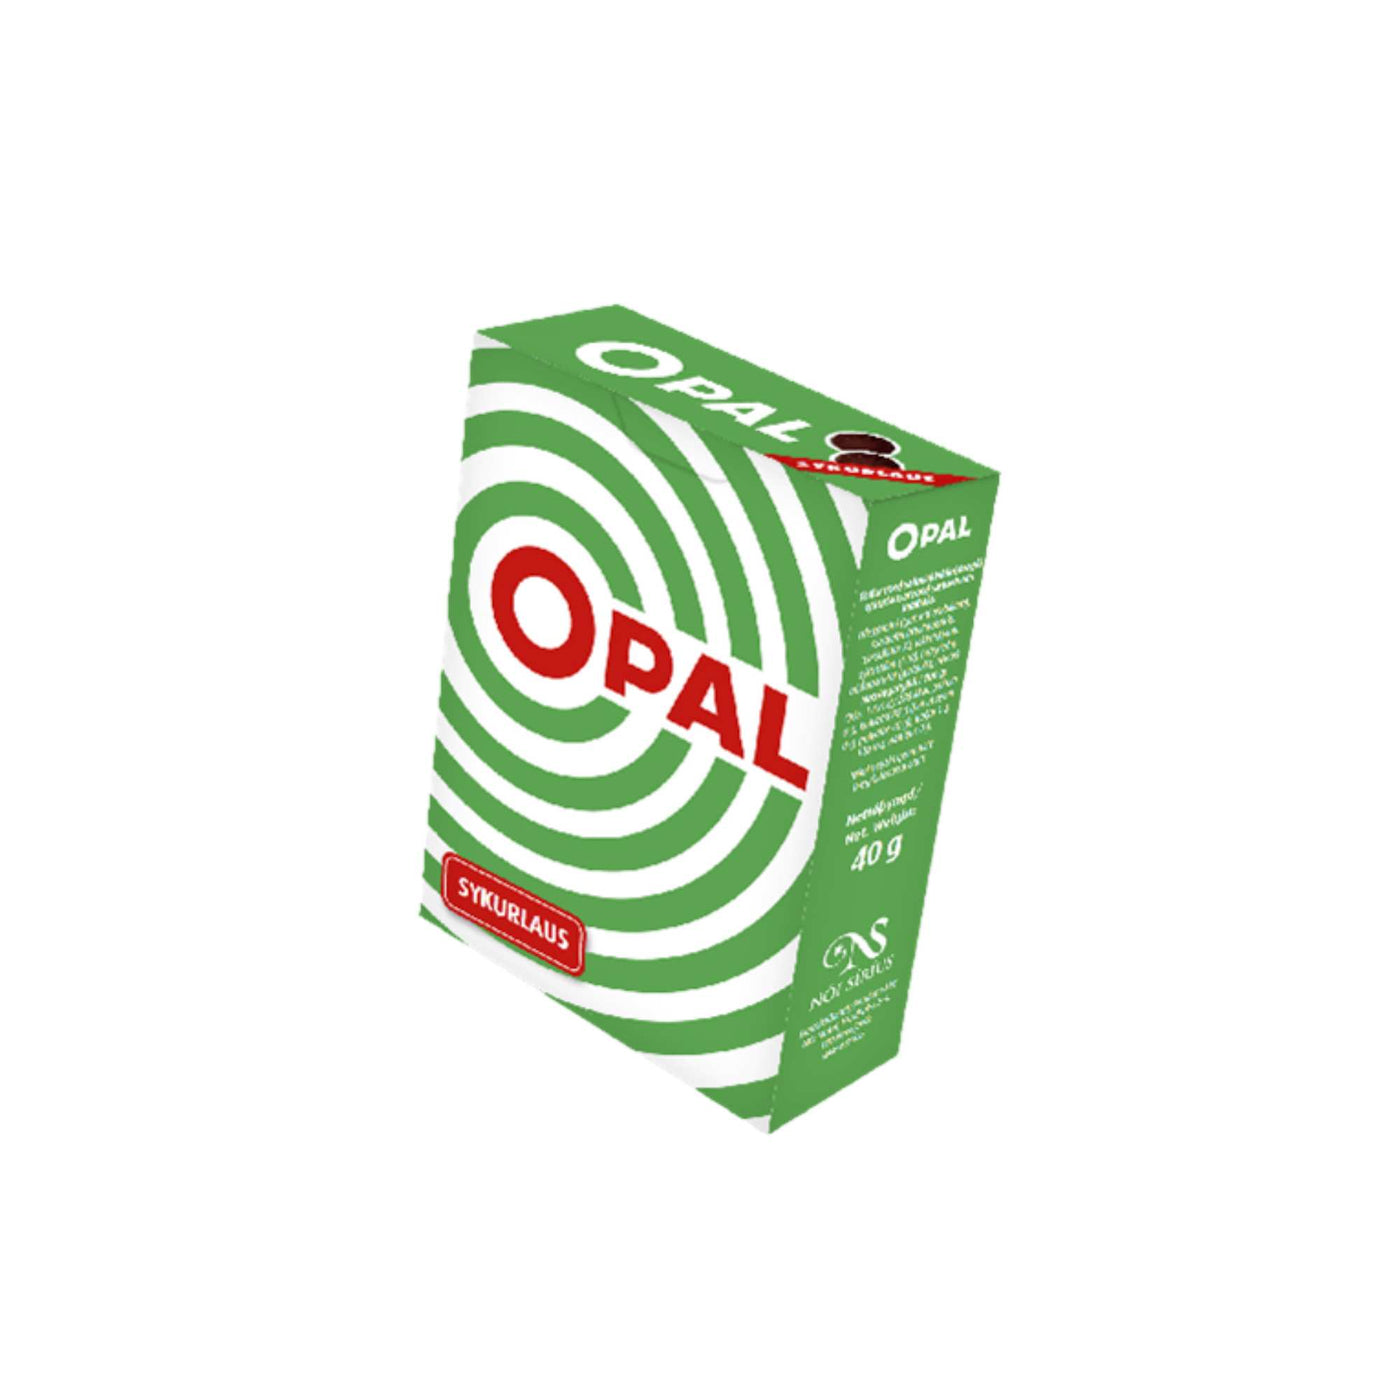 Opal Green Sugar Free - Salmiak Liquorice Pastilles